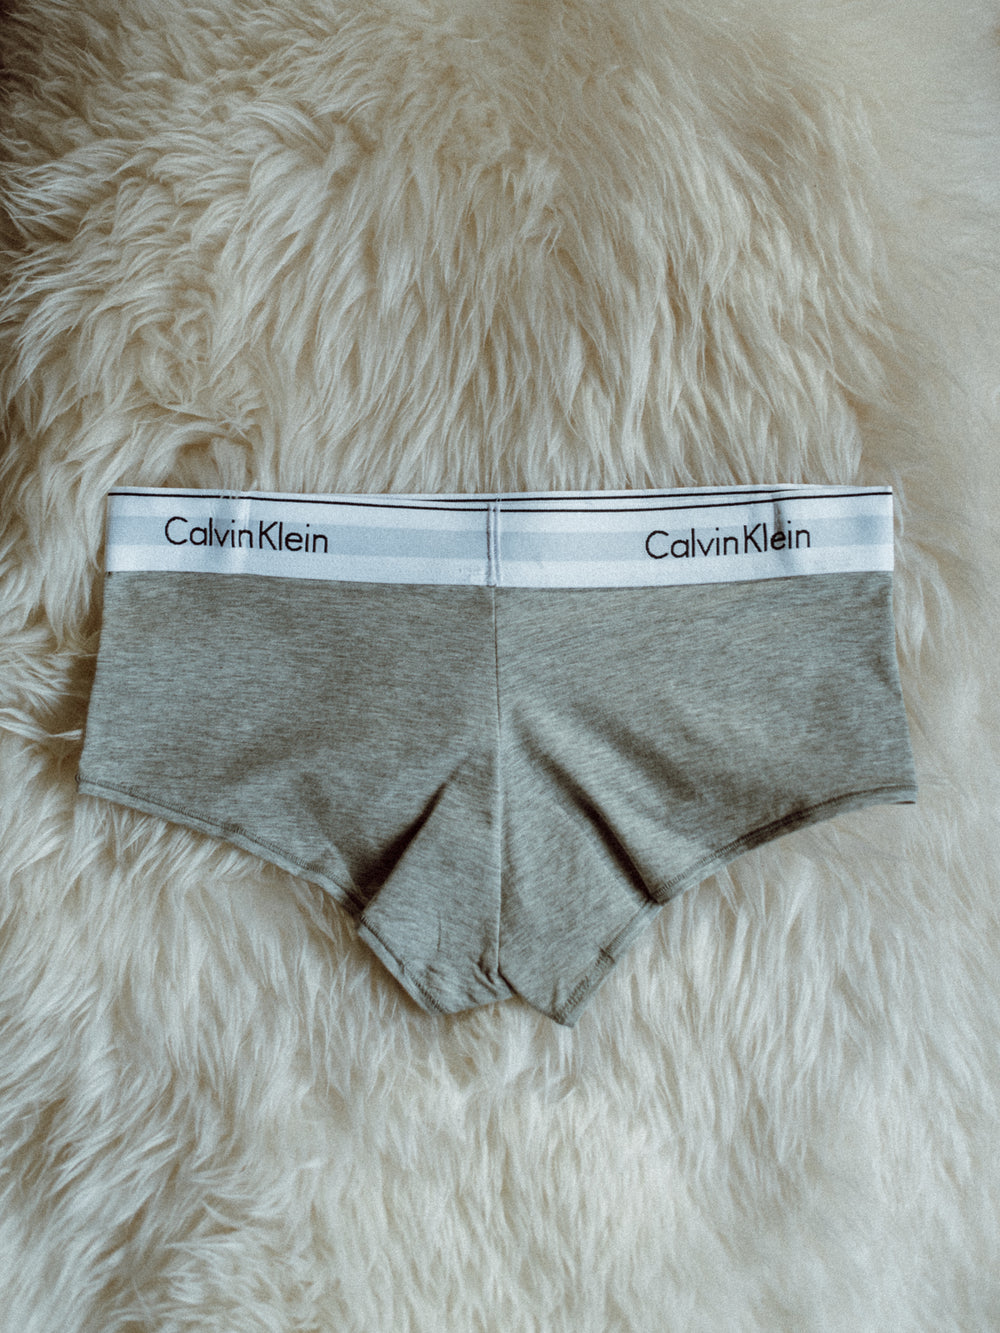 Calvin Klein Women`s Carousel Cotton Boyshorts 3 Pack  (HGreen(QP2412-400)/HG_HB, Medium)